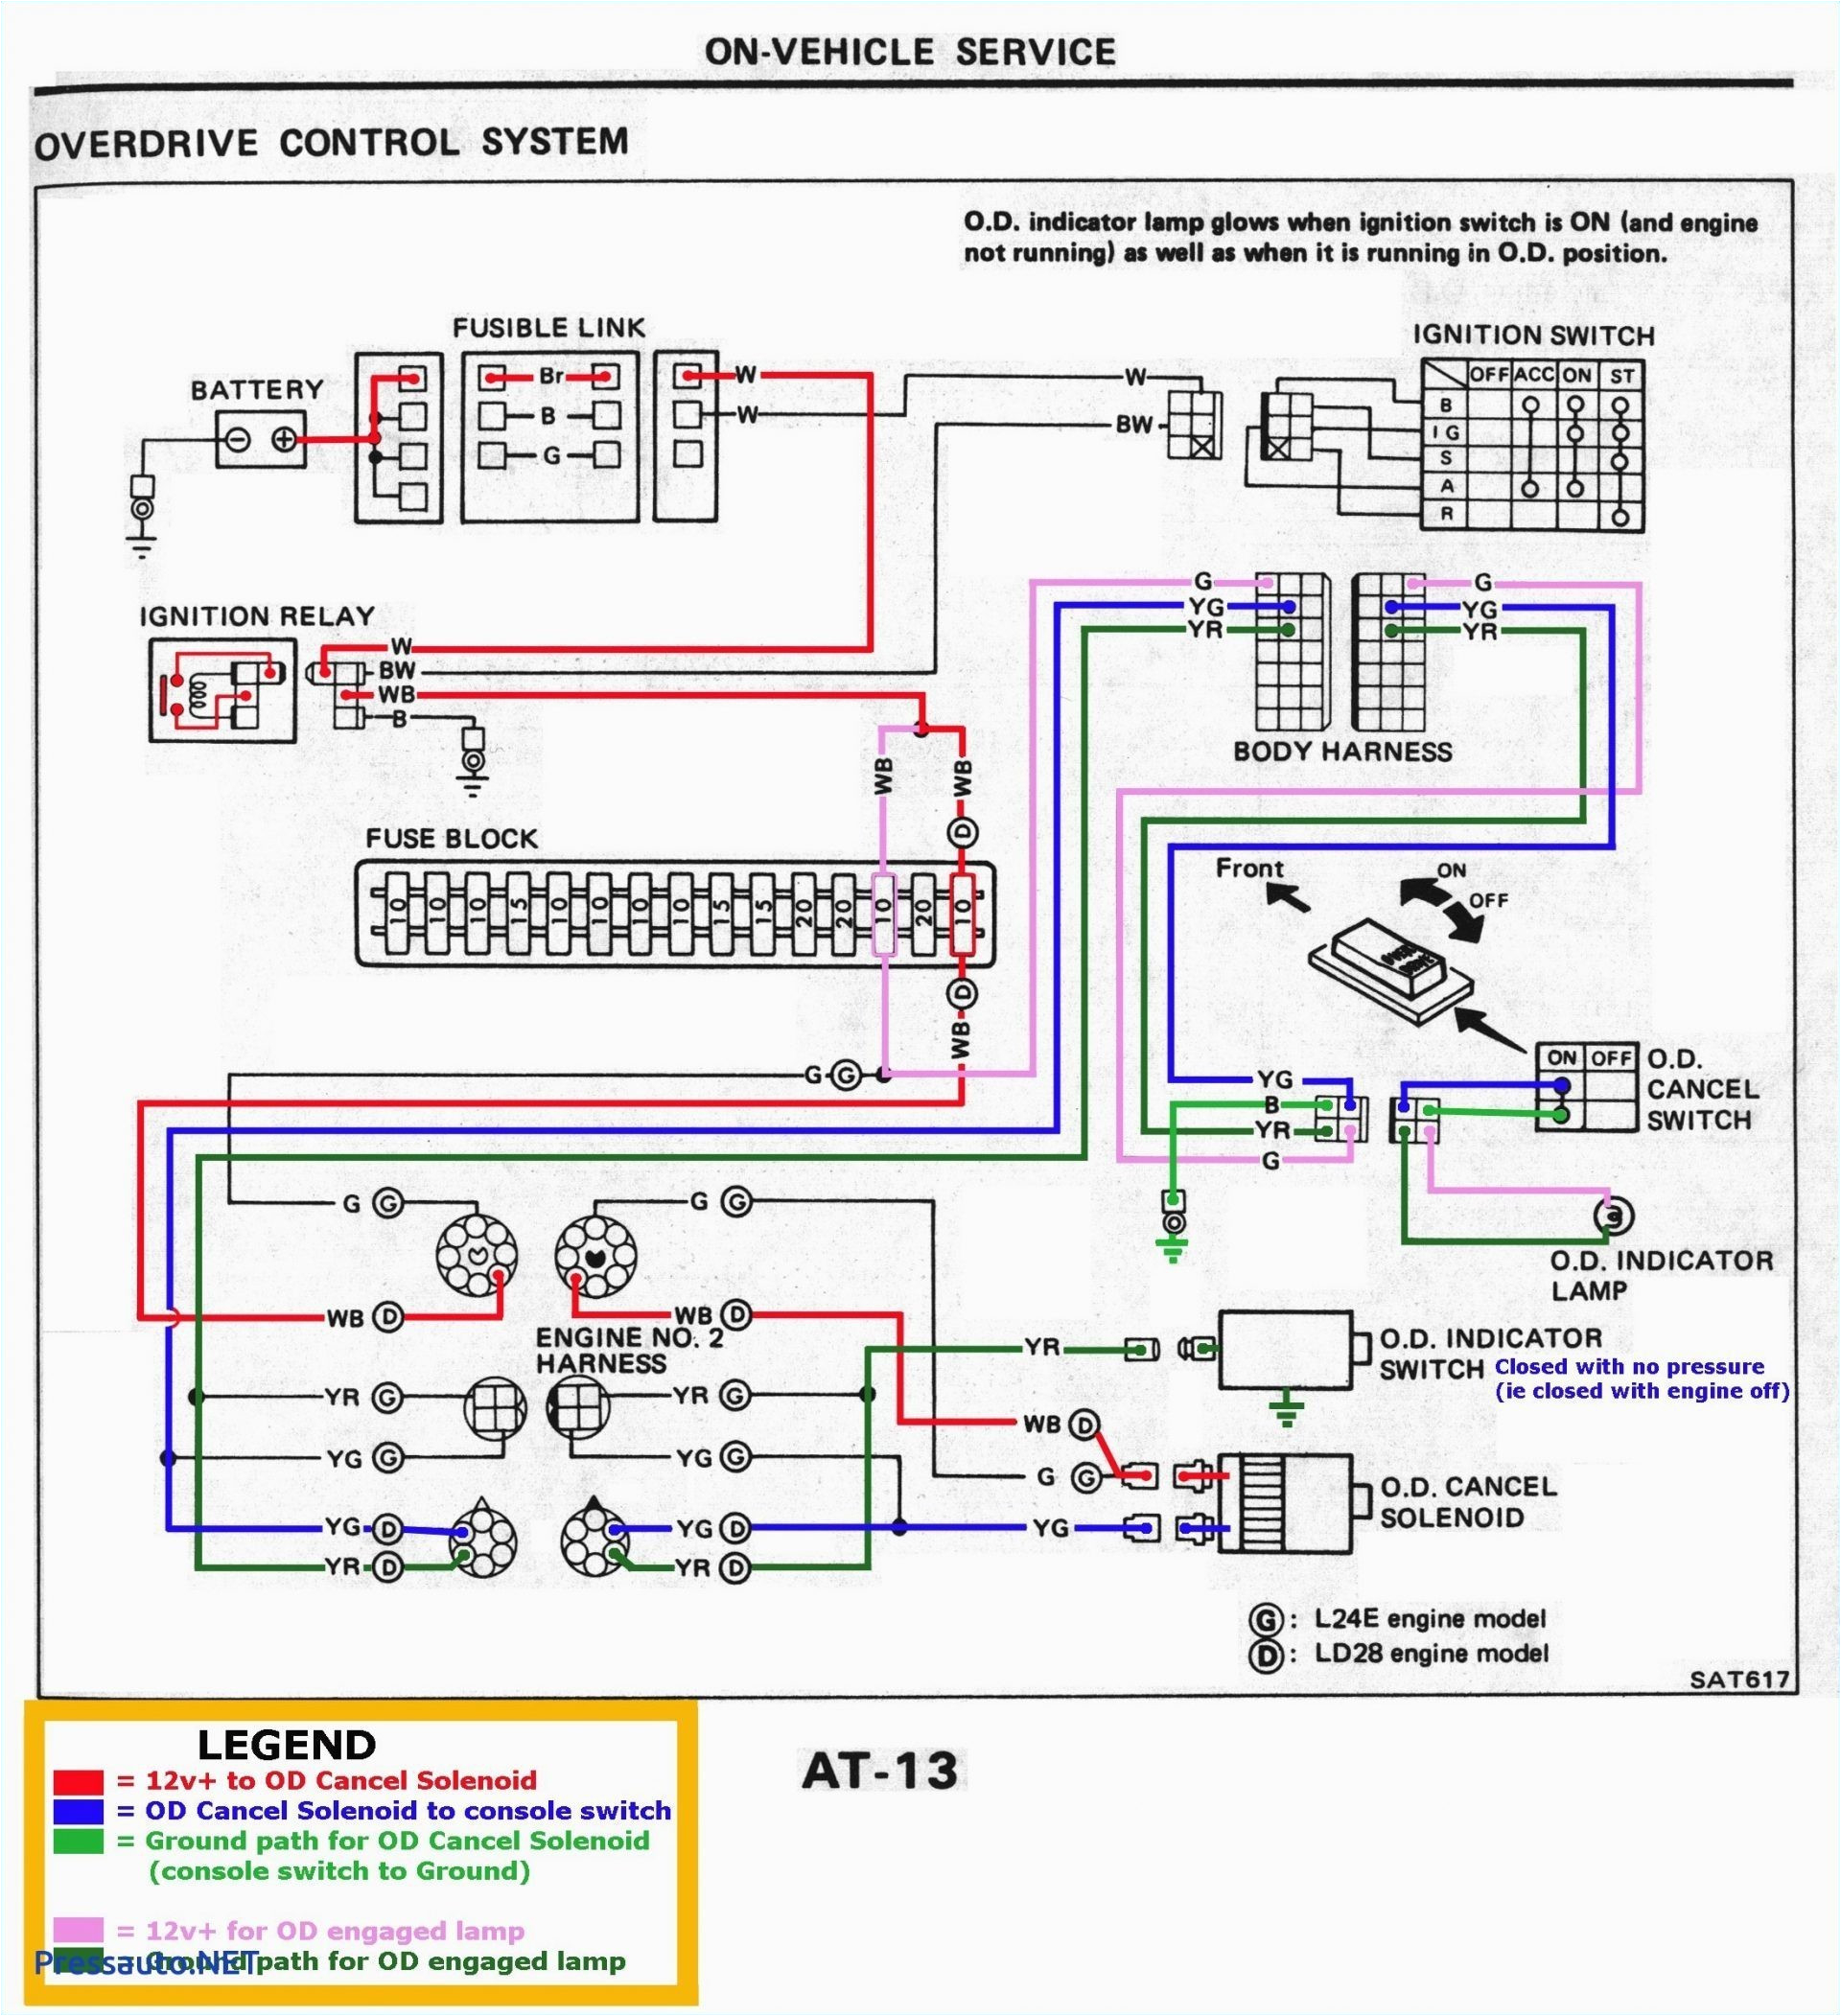 Vw Wiring Harness Diagram Jayco Wiring Harness Diagram Wiring Diagram Show